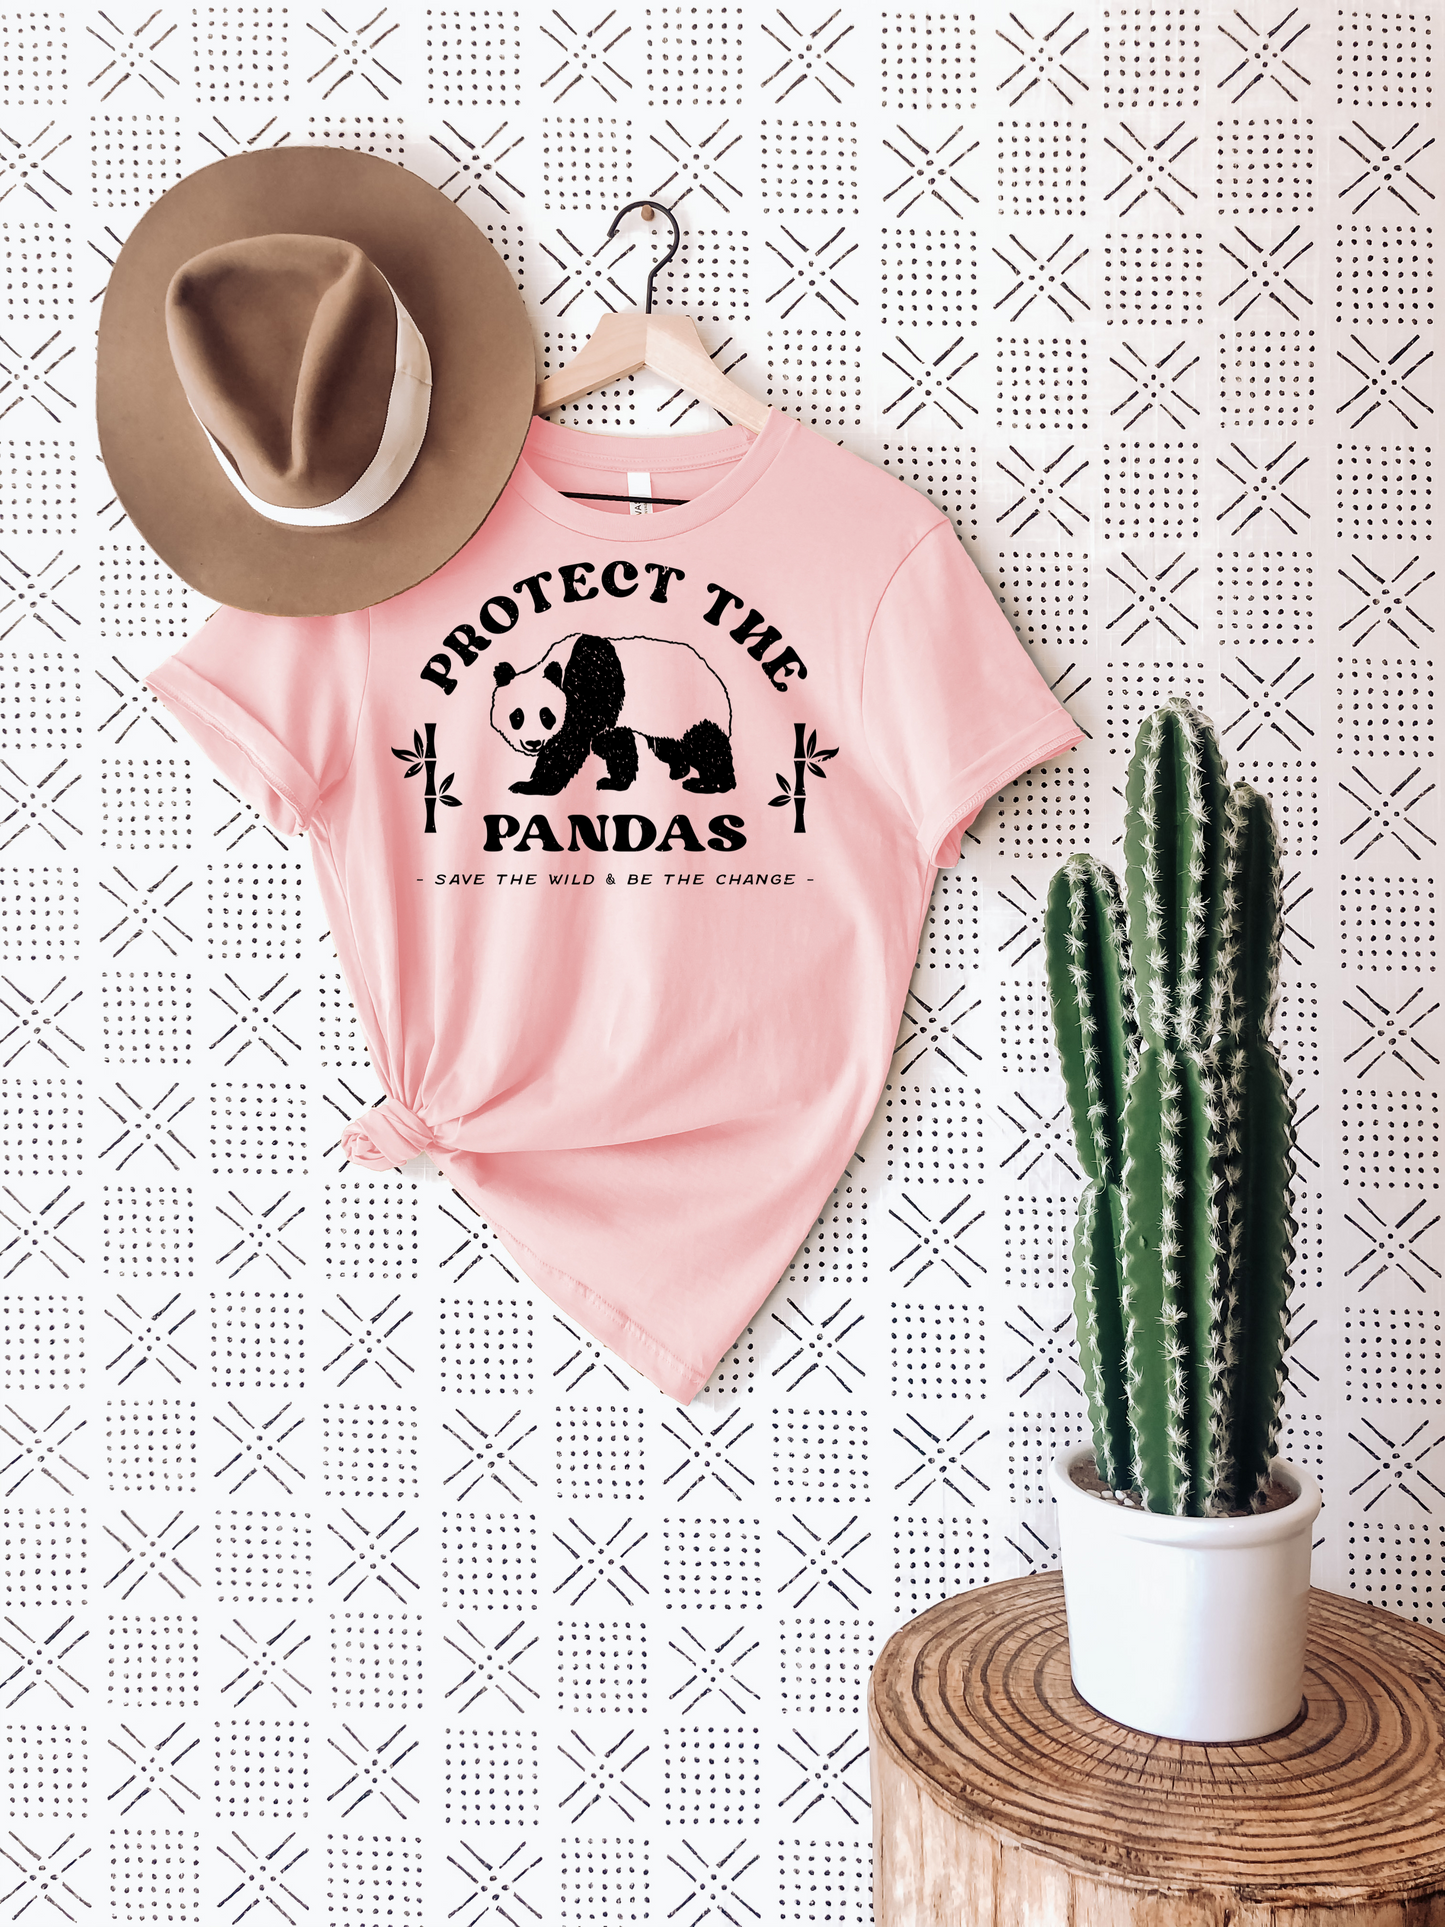 Protect The Pandas T-Shirt